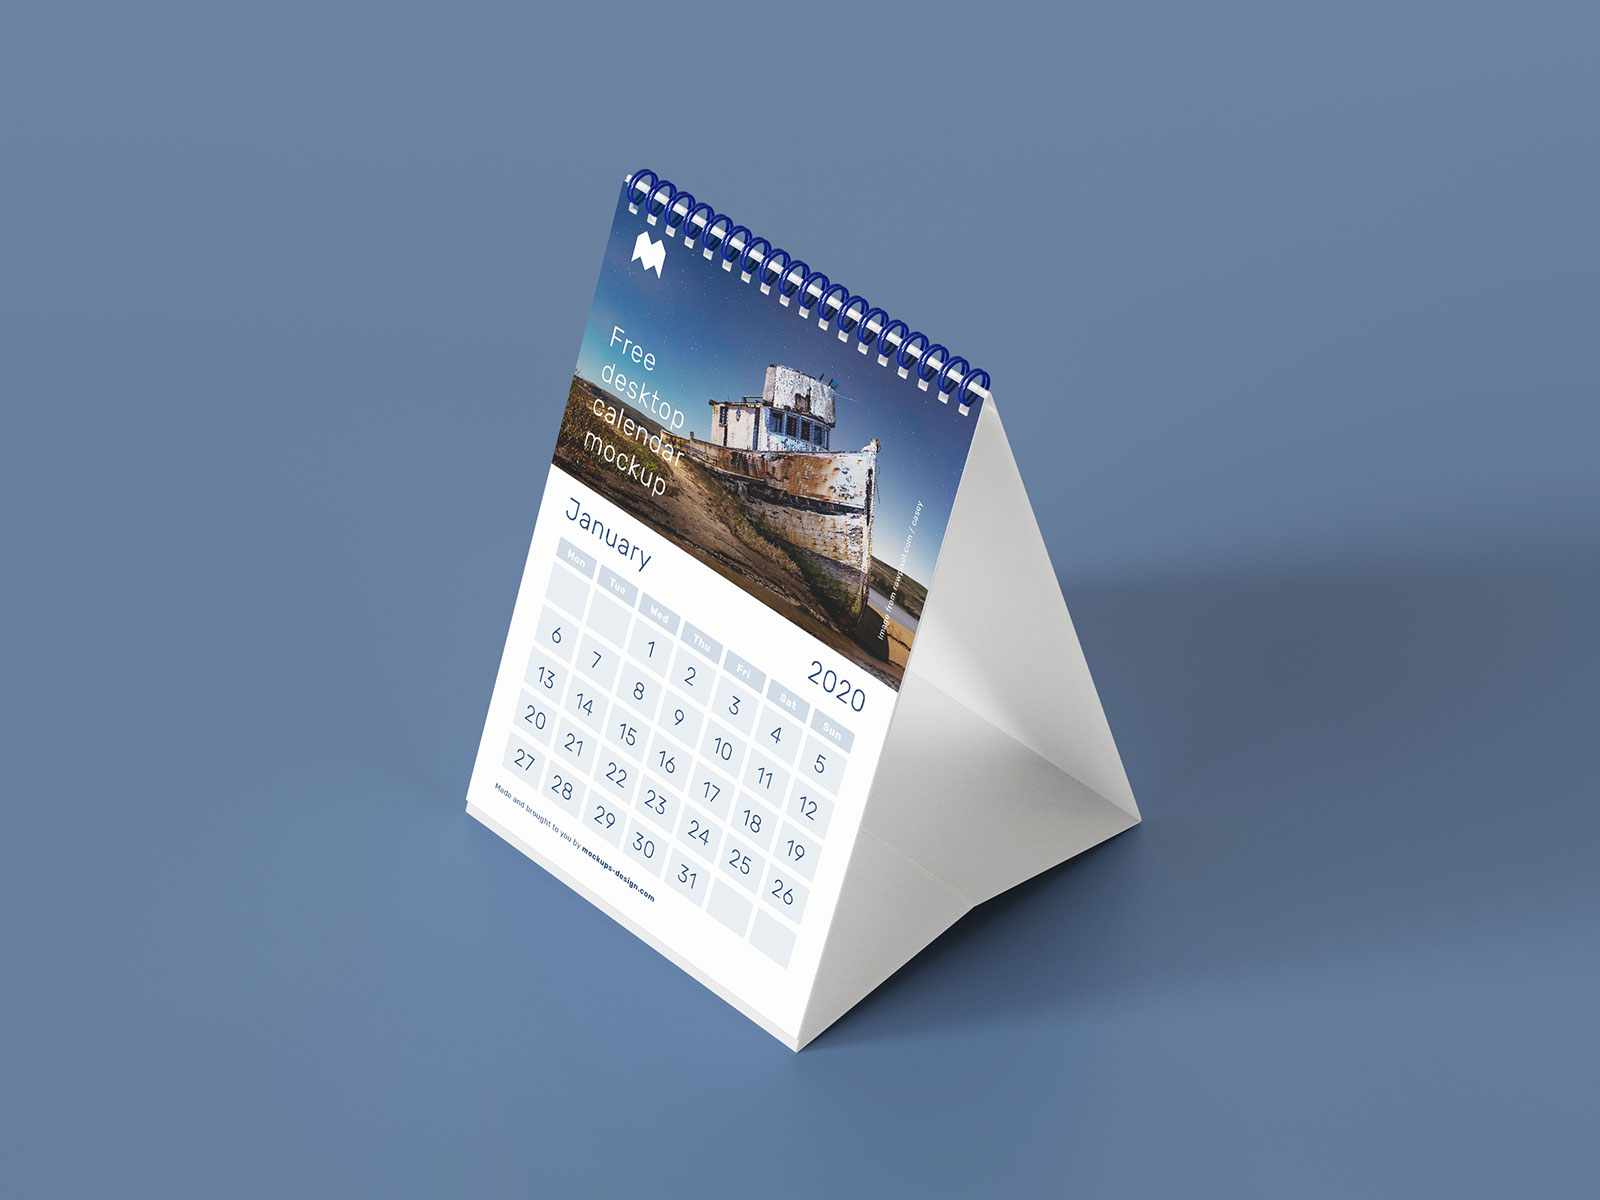 Free A5 Desk Calendar Mockup PSD Set